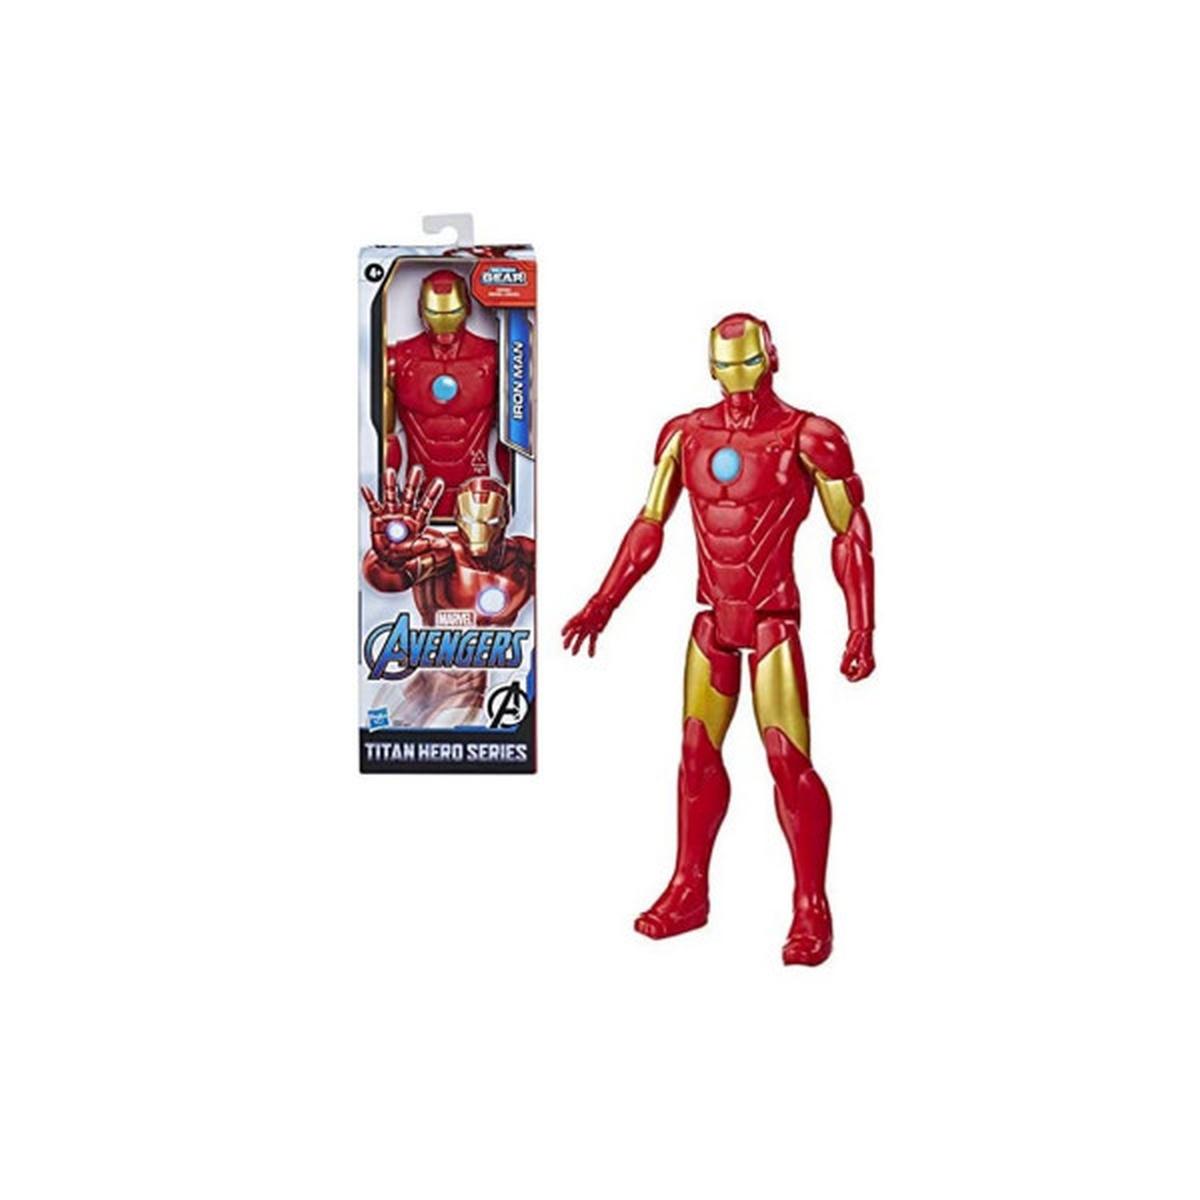 Avengers titan hero iron man 30 cm